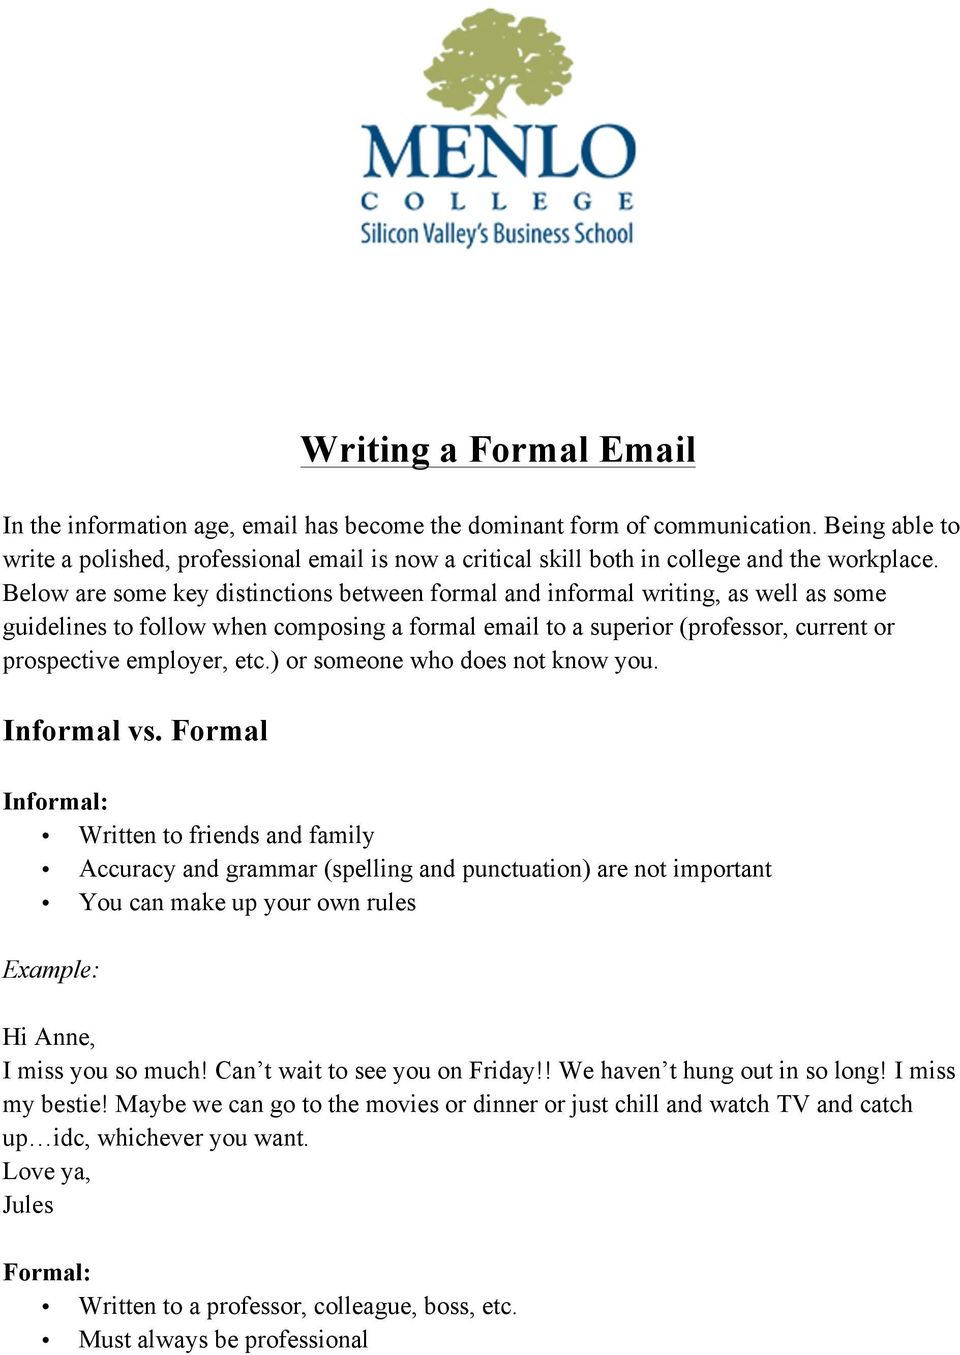 PDF Télécharger formal email writing examples pdf Gratuit PDF